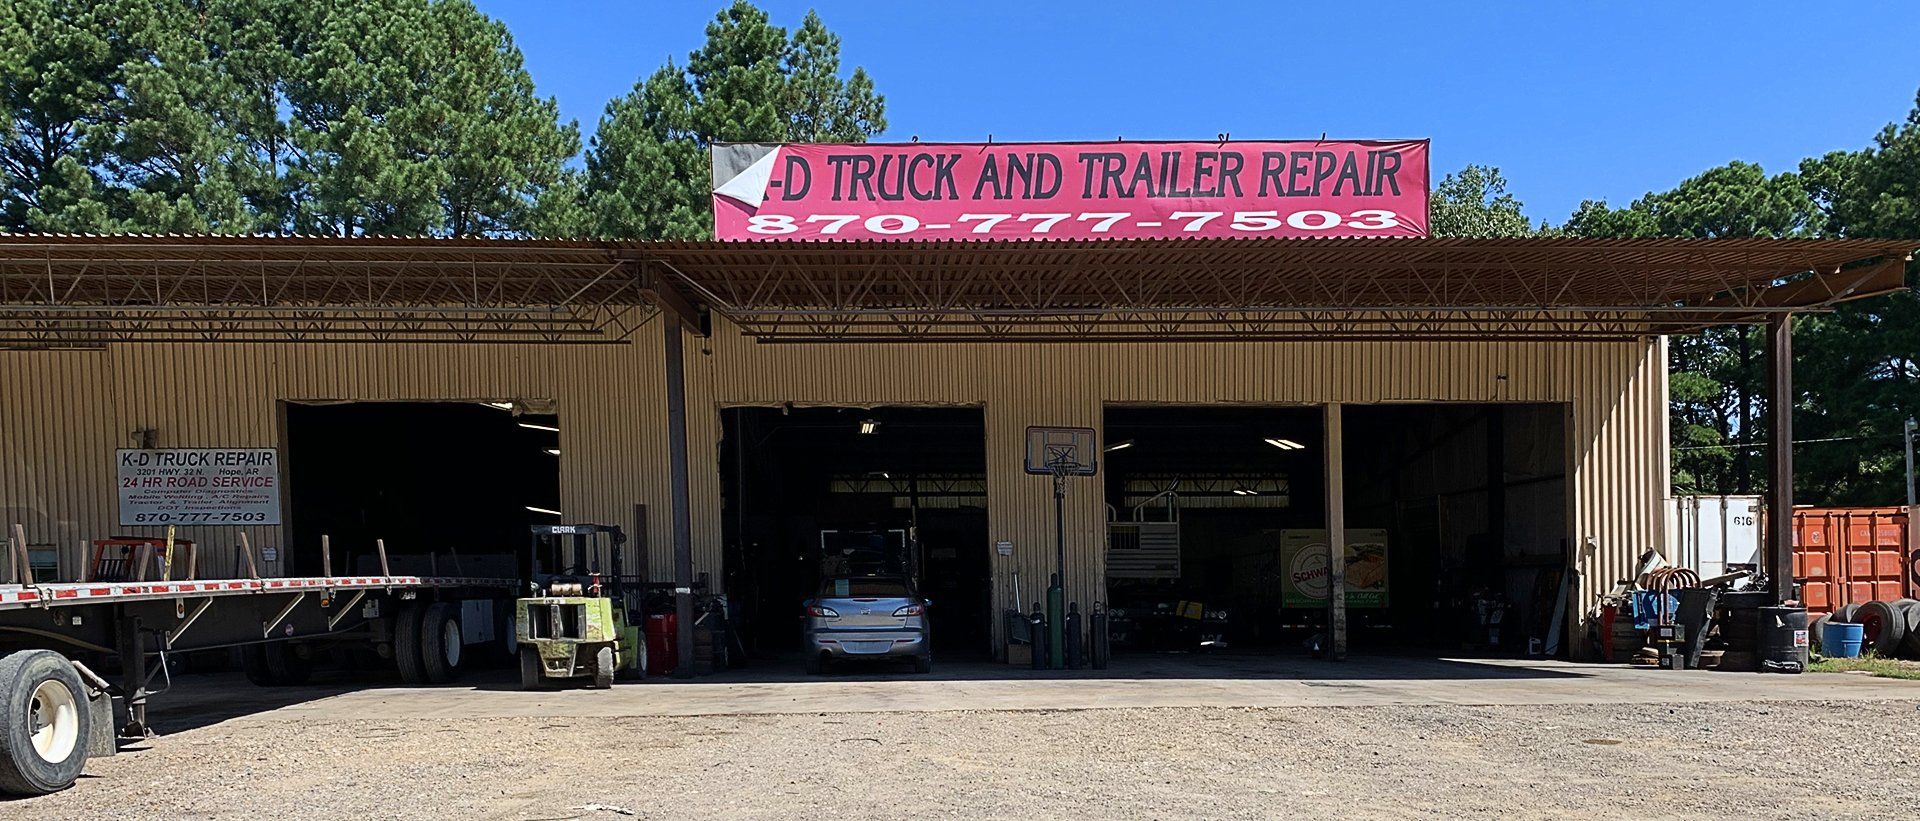 KD Truck and Trailer Repair shop